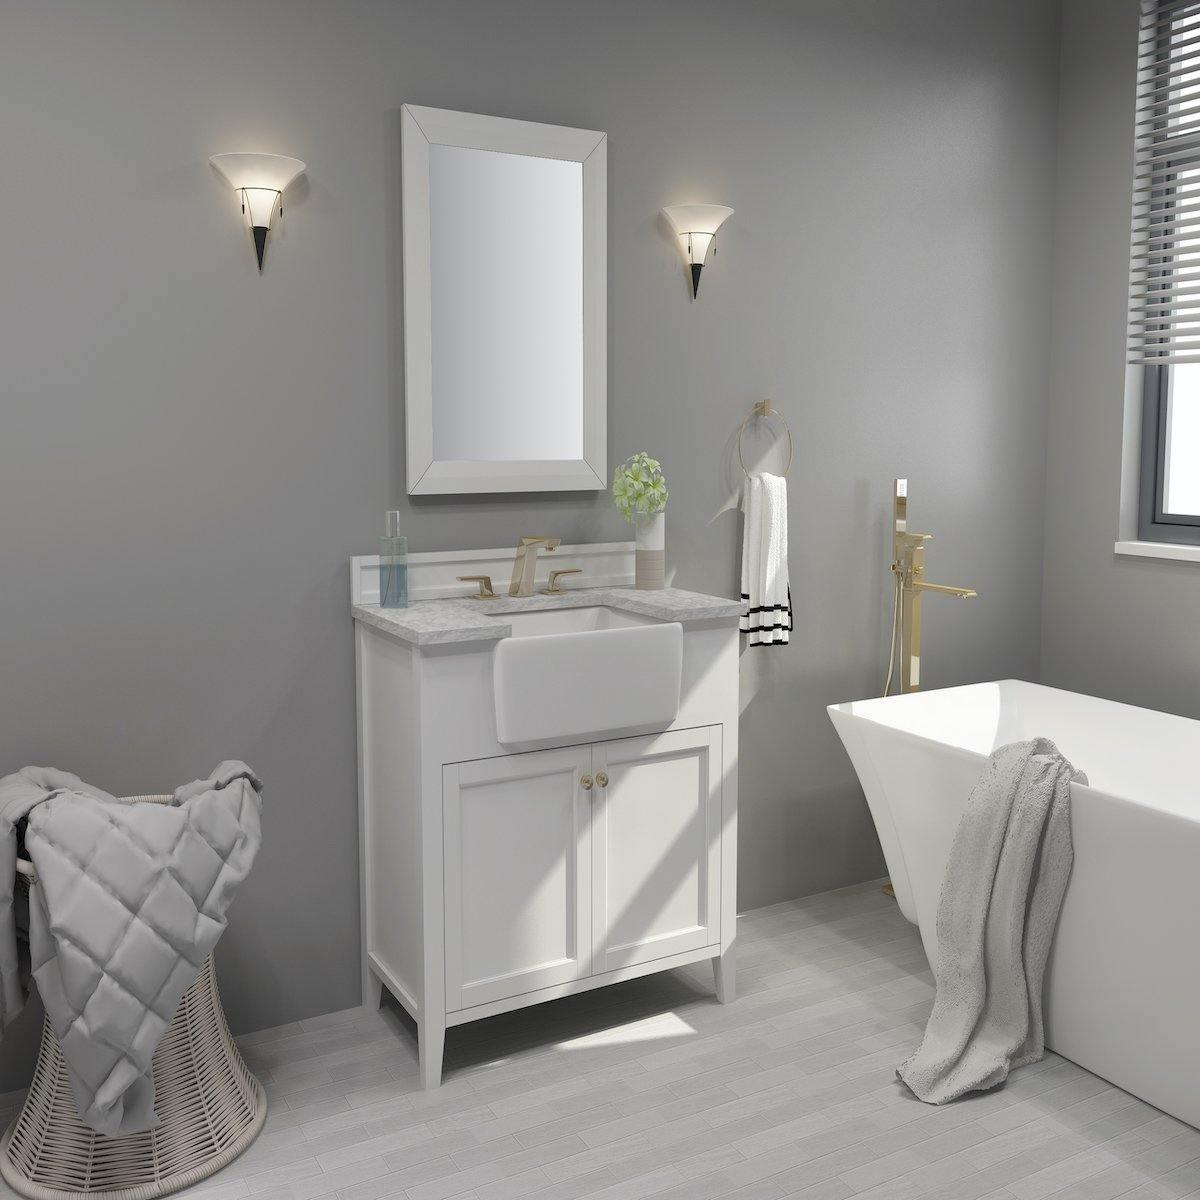 Ancerre Designs Adeline 36 Inch White Single Vanity in Bathroom